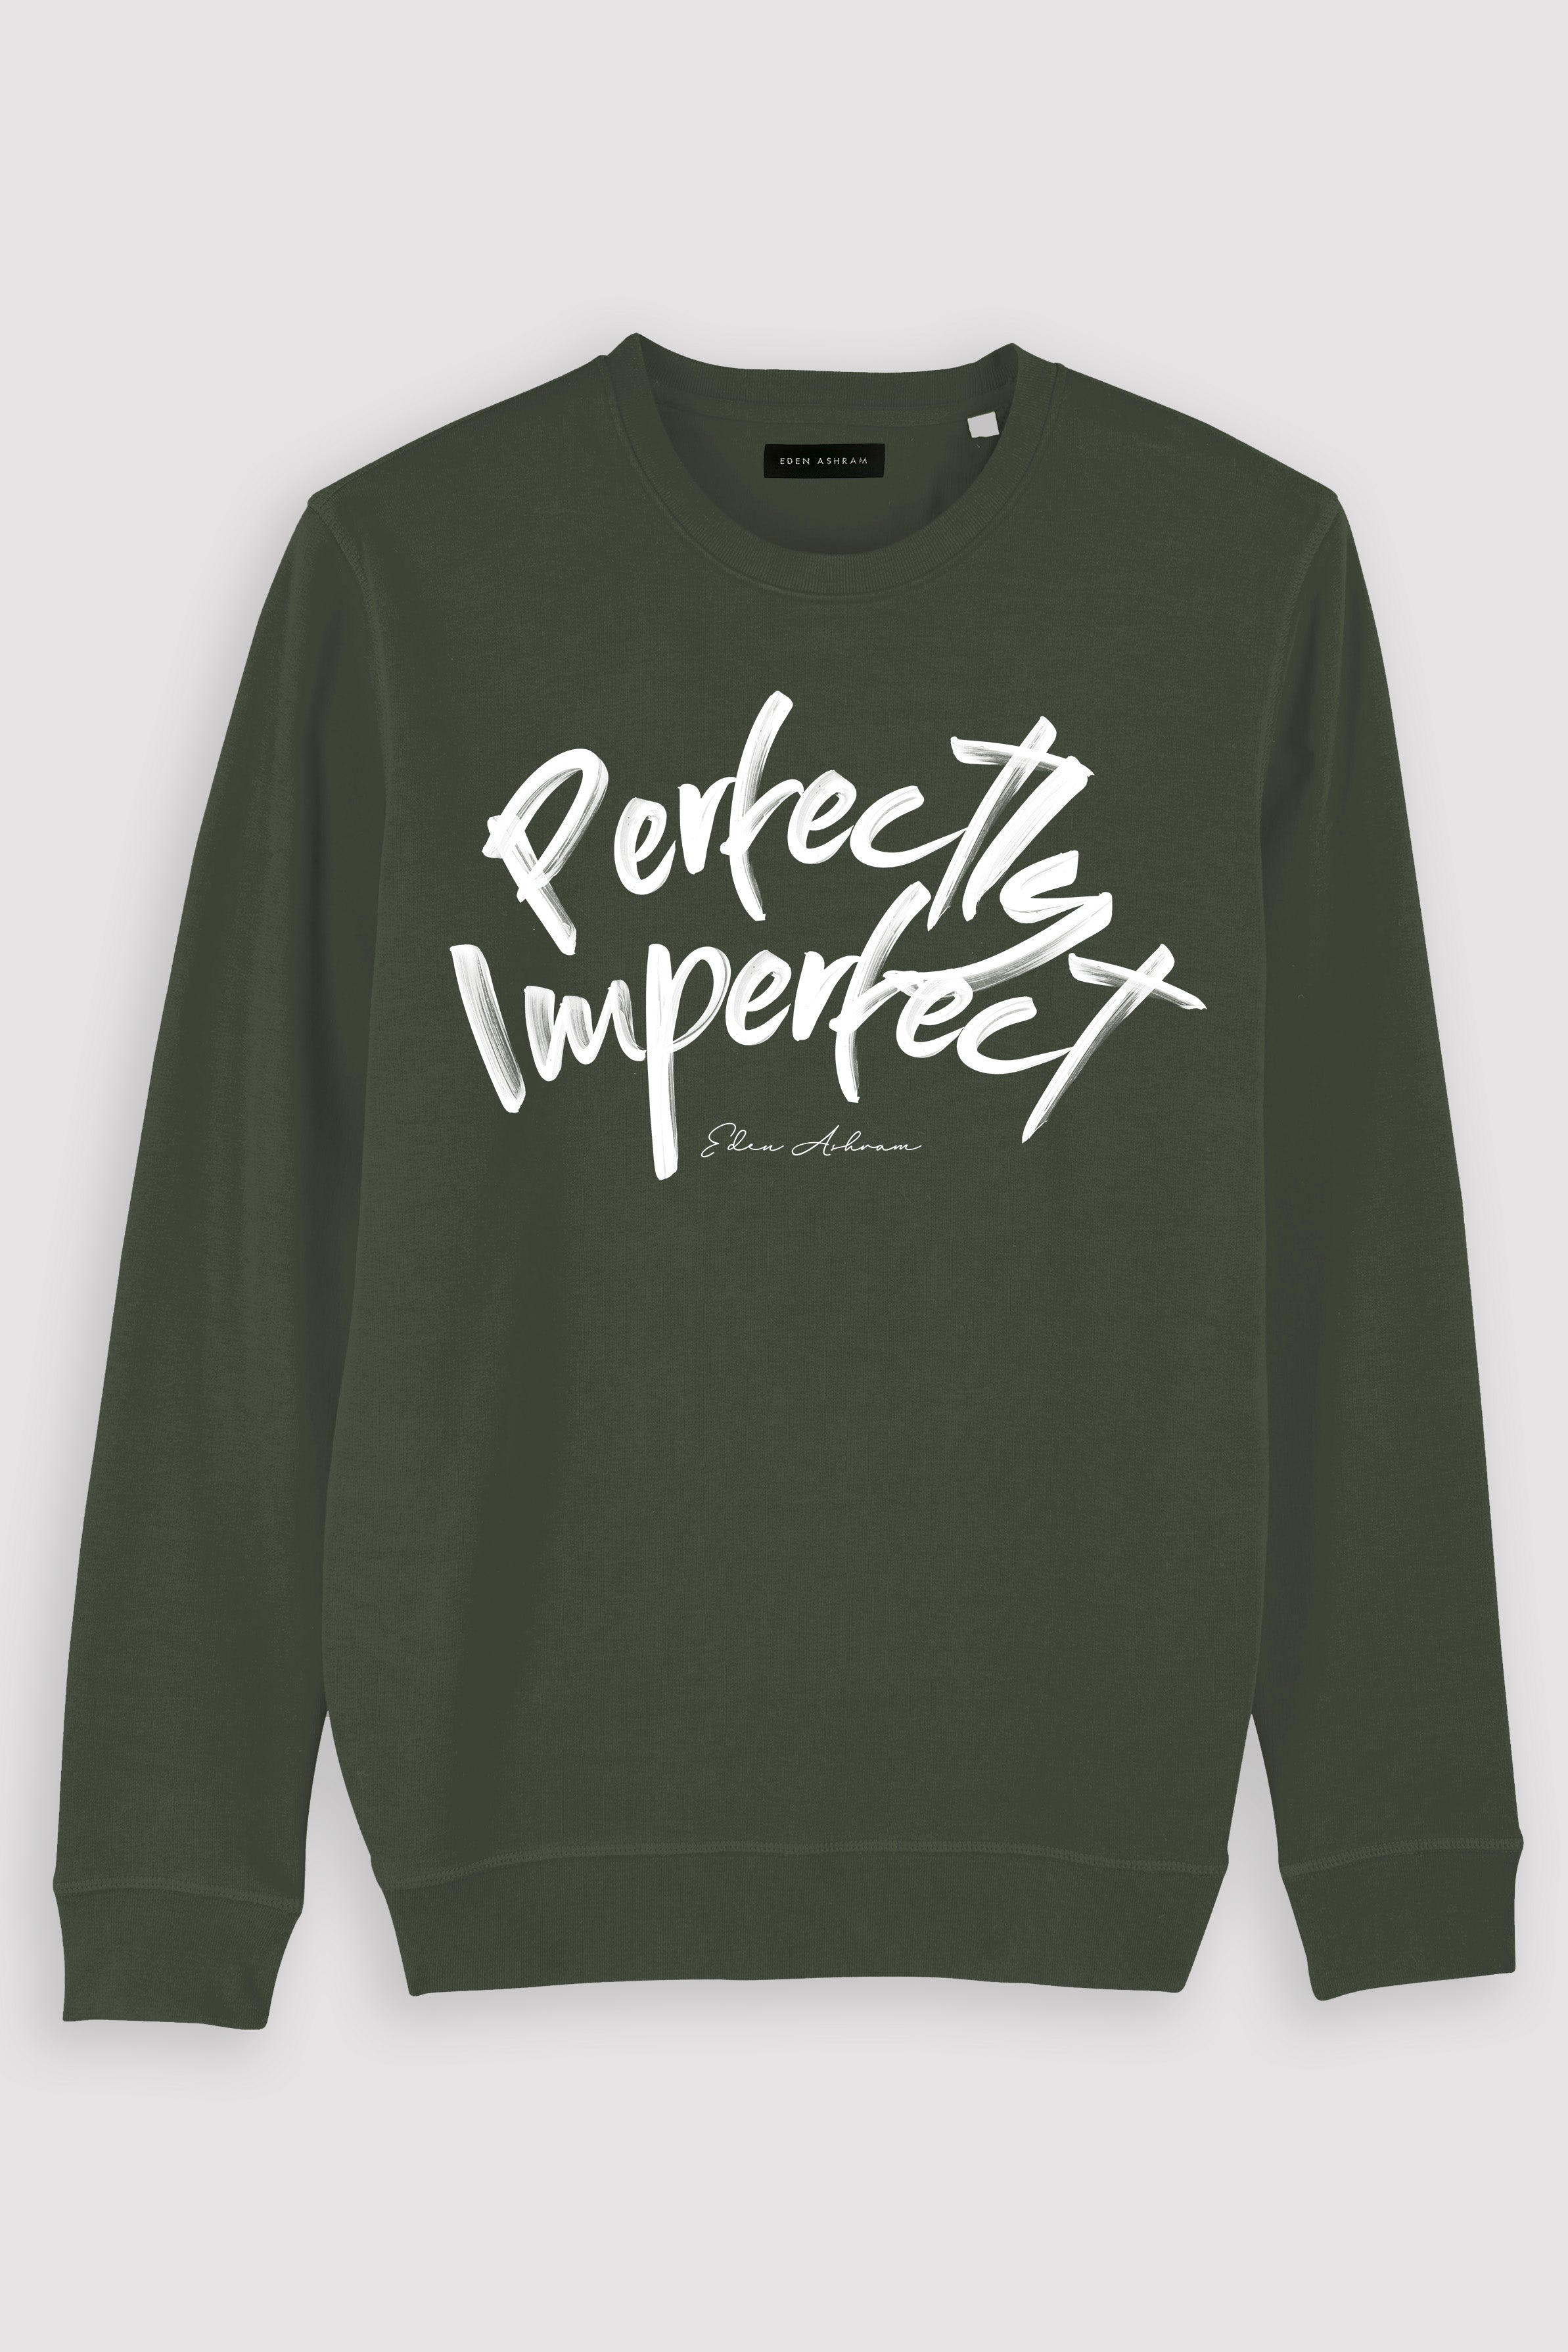 Eden Ashram Perfectly Imperfect Premium Crew Neck Sweatshirt Khaki